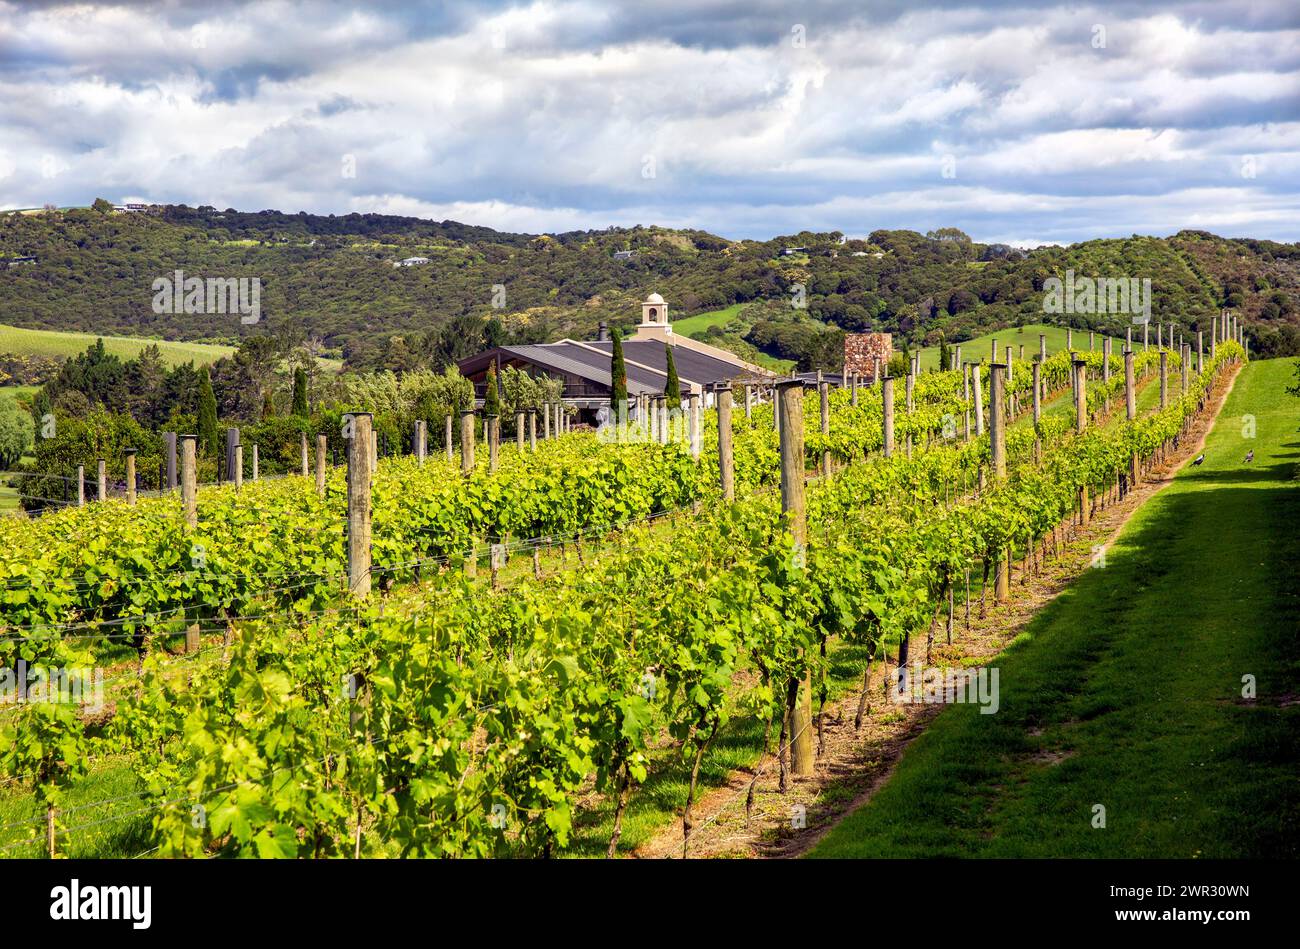 Grape vines at the Tantalus Estate vineyards in the Onetangi Valley, Waiheke Island, Aotearoa / New Zealand.  Waiheke Island is known as New Zealand’s Stock Photo